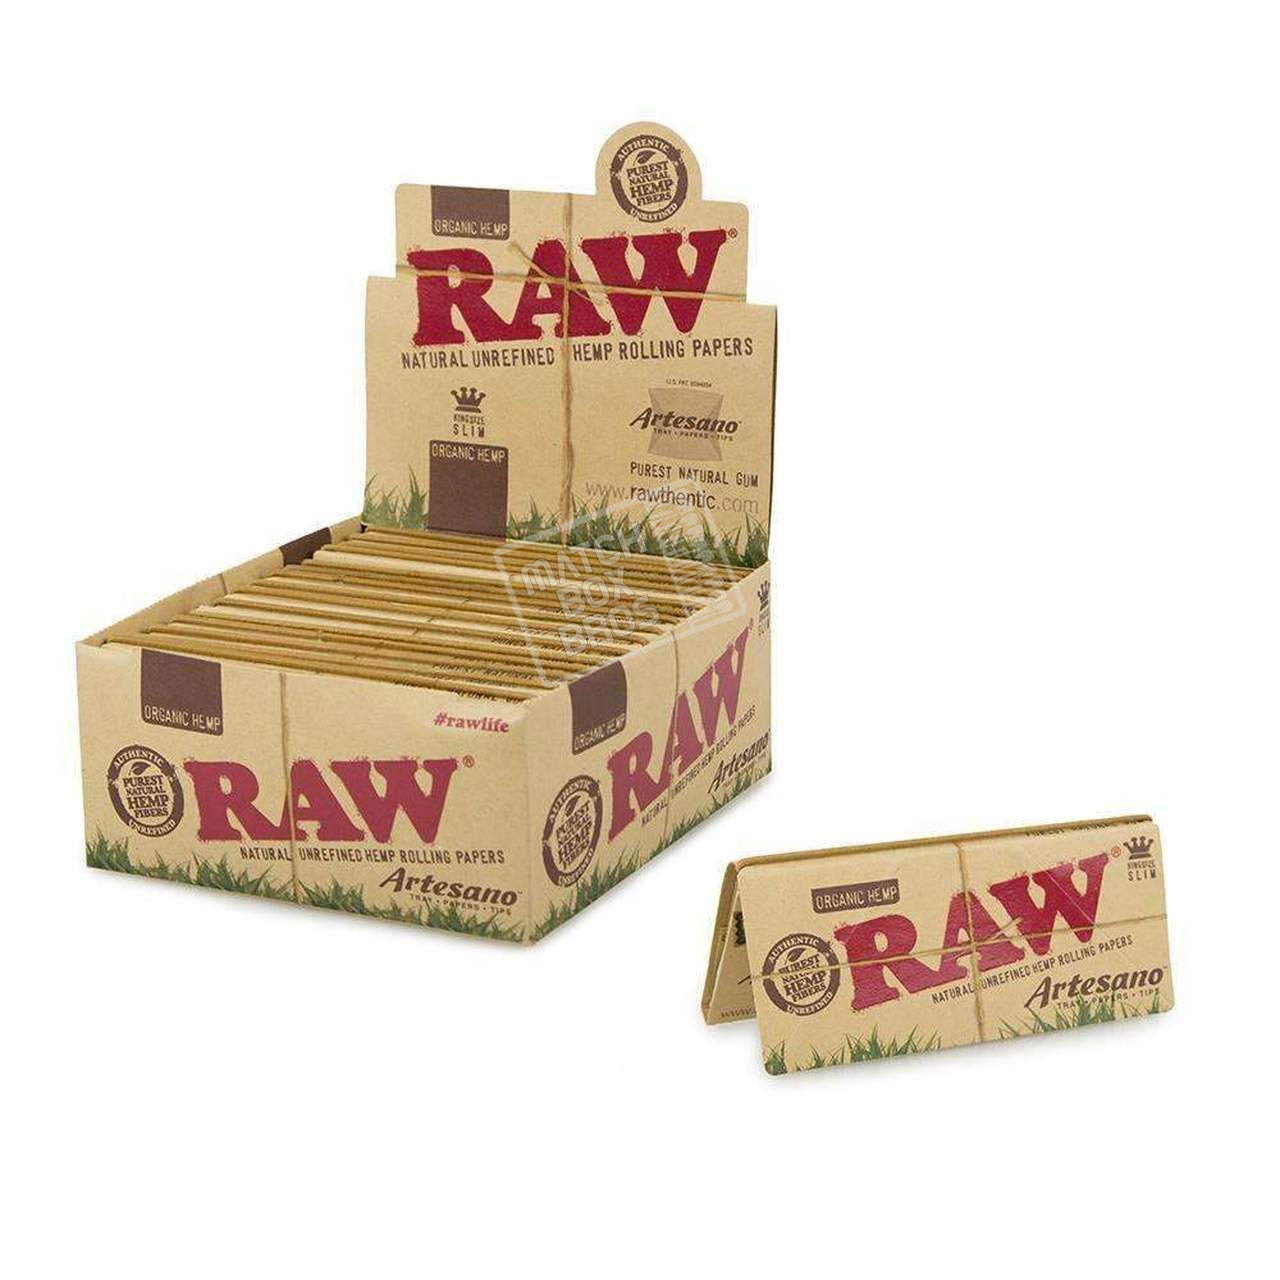 RAW Organic Hemp Artesano King Size Slim Rolling Paper Open Box